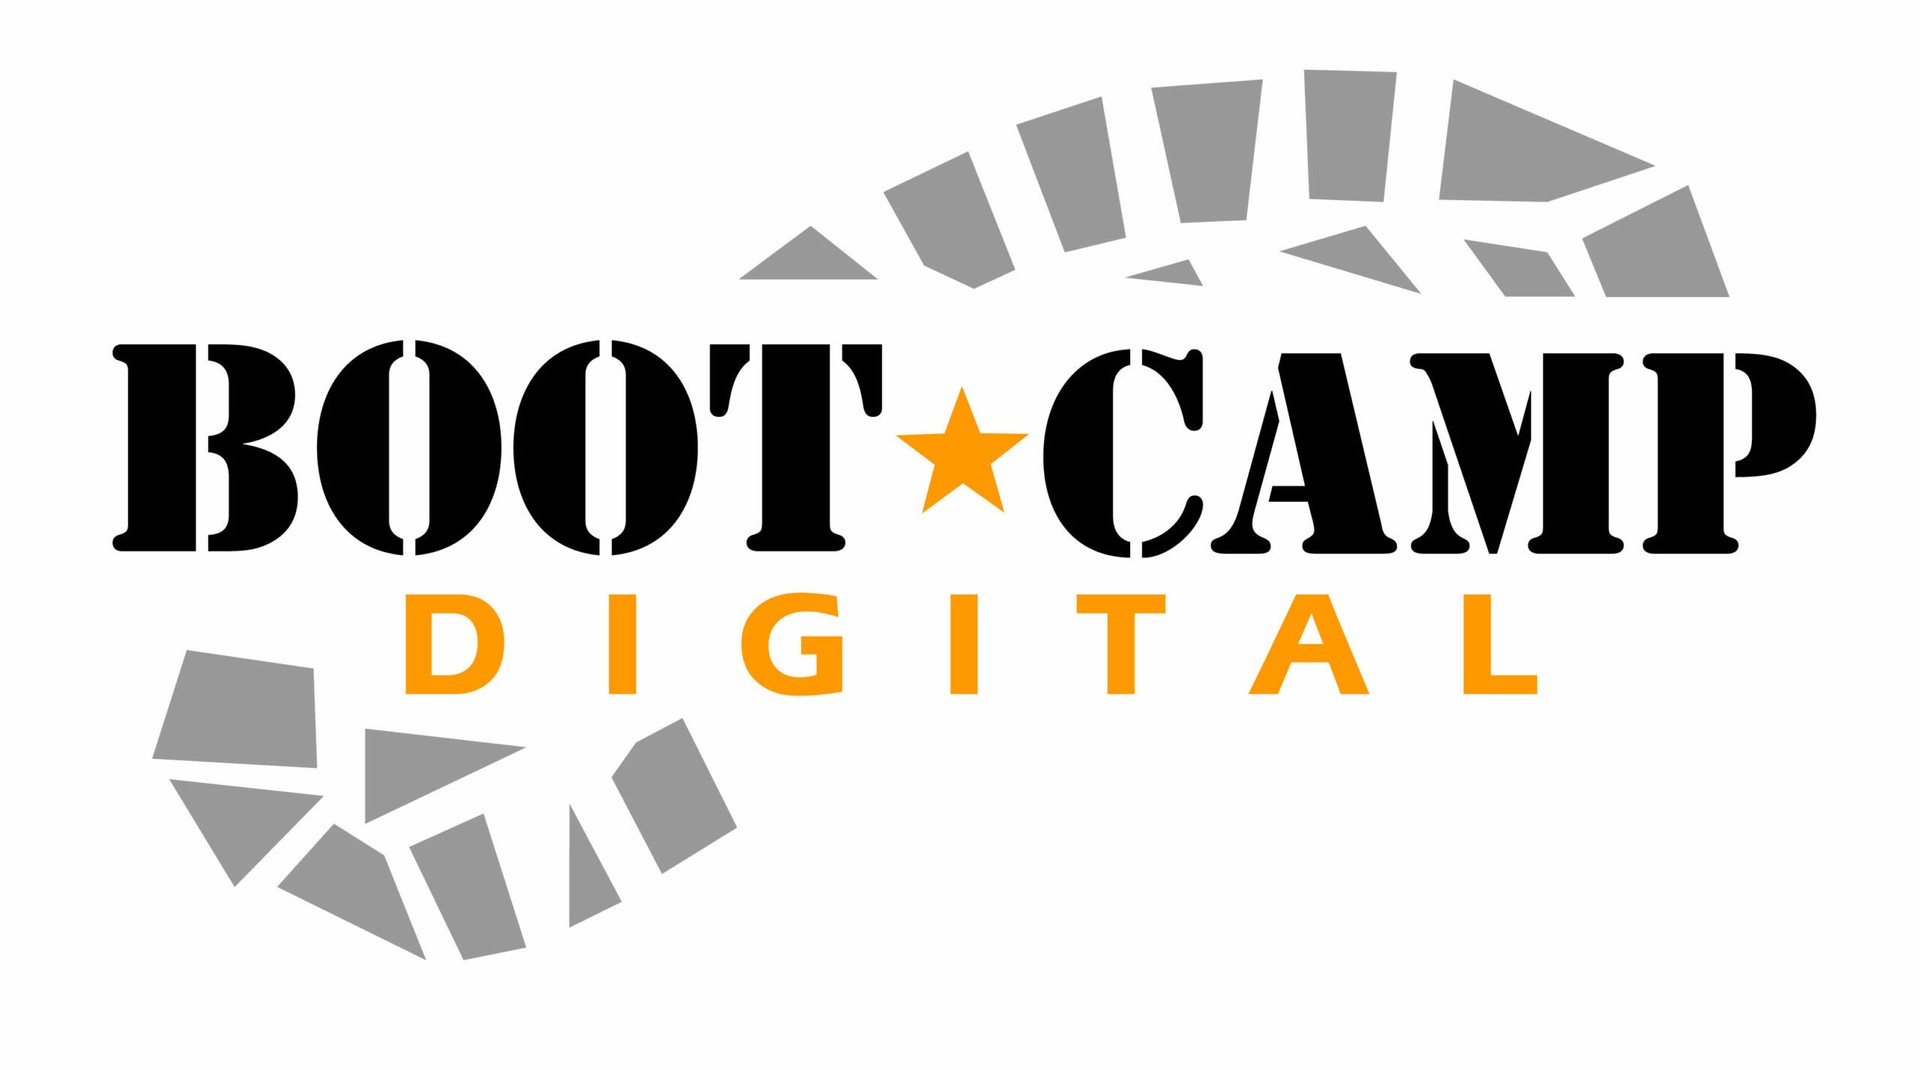 Digital Marketing courses in Patna - Bootcamp logo